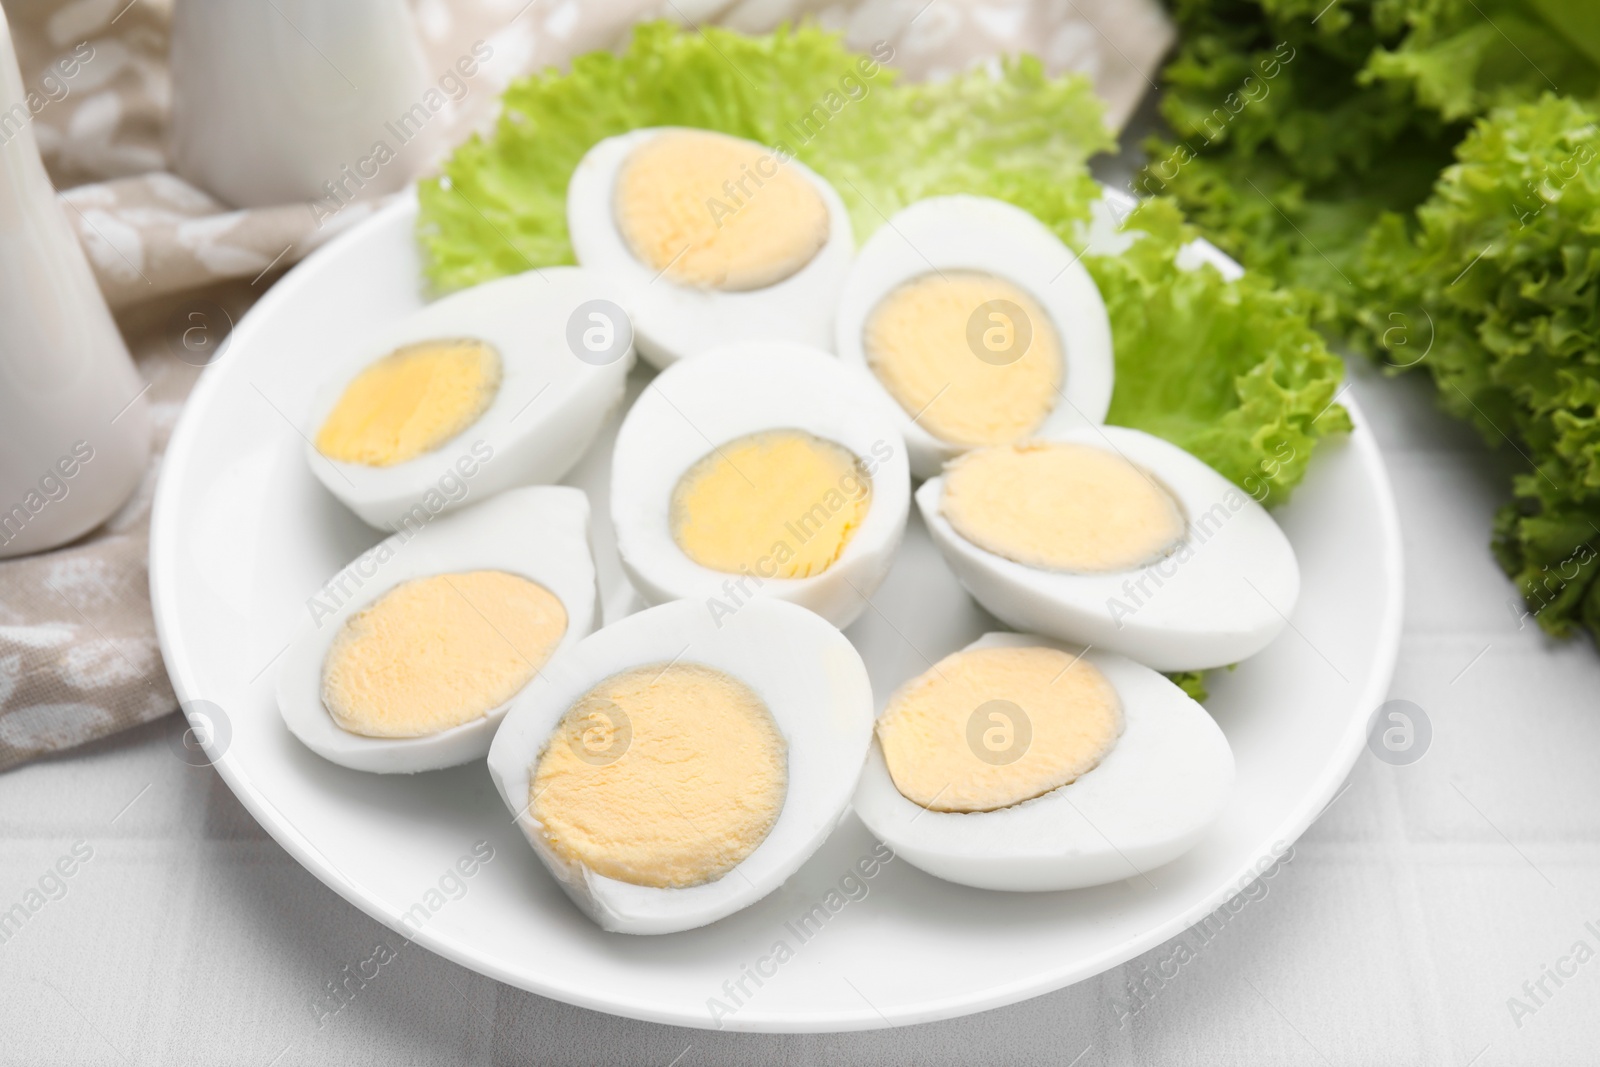 Photo of Fresh hard boiled eggs and lettuce on white tiled table